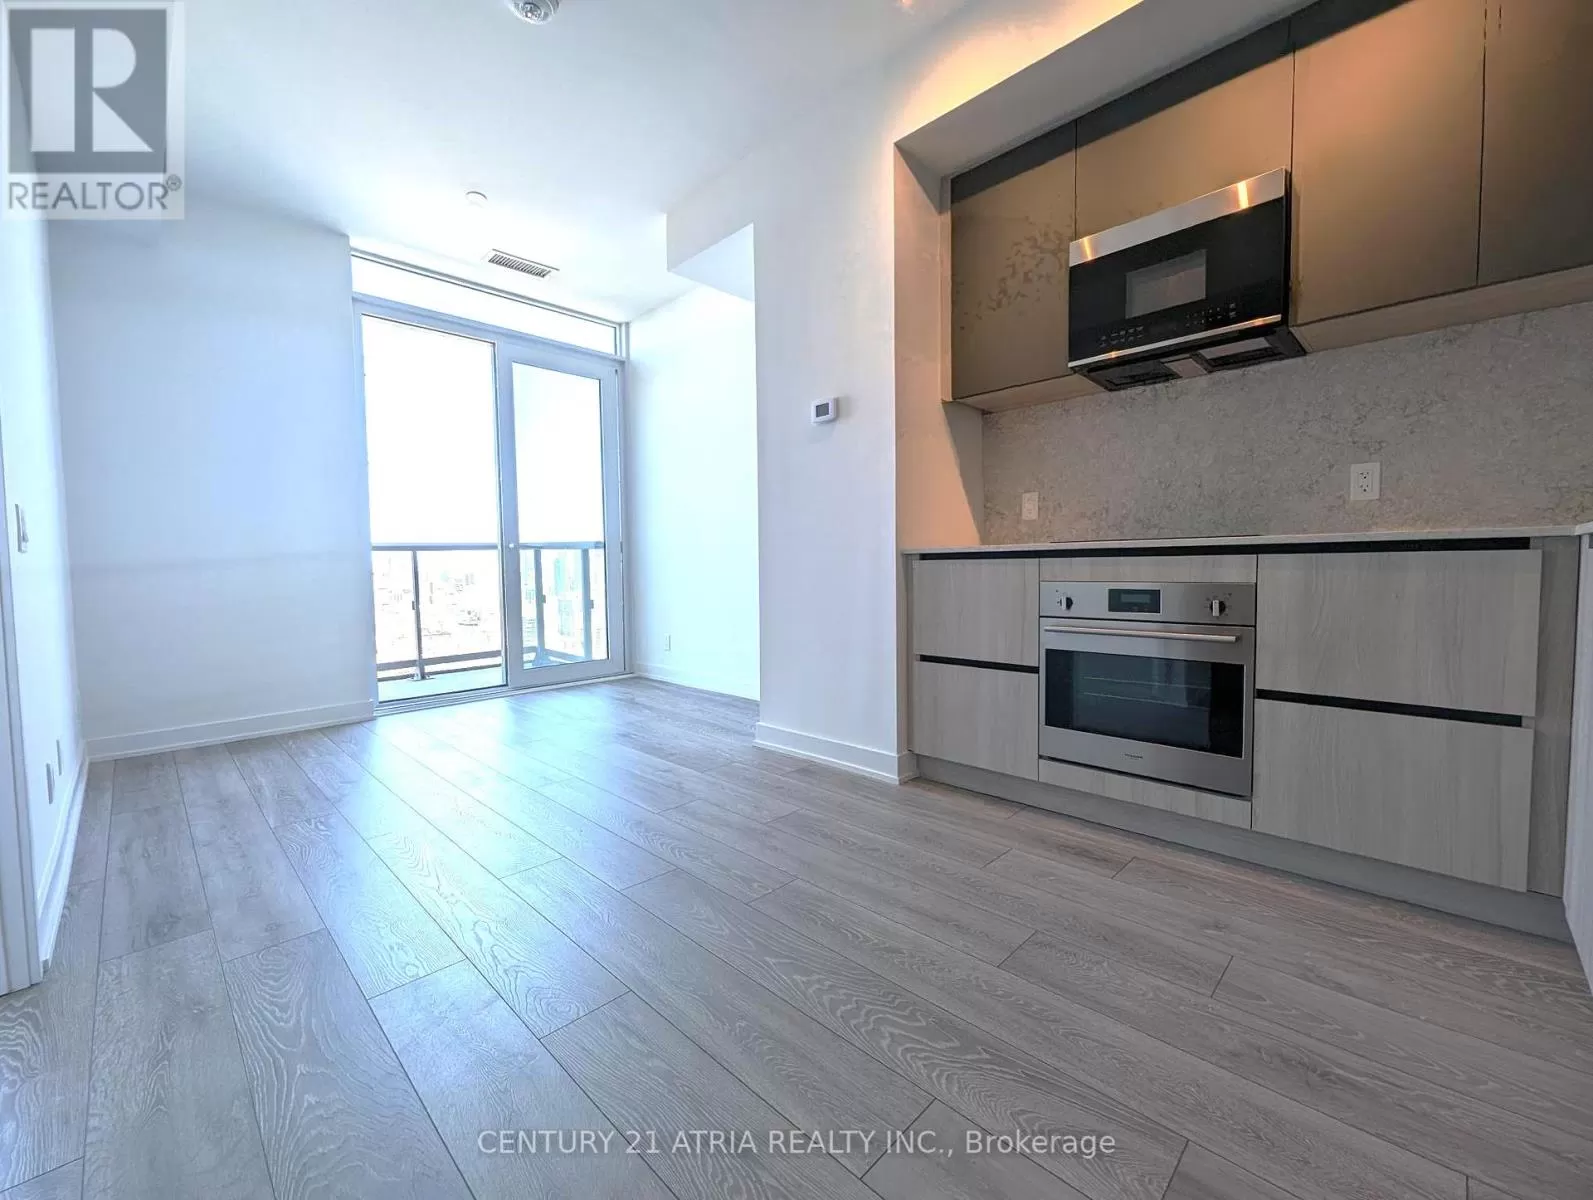 Apartment for rent: 5209 - 108 Peter Street, Toronto, Ontario M5V 0W2